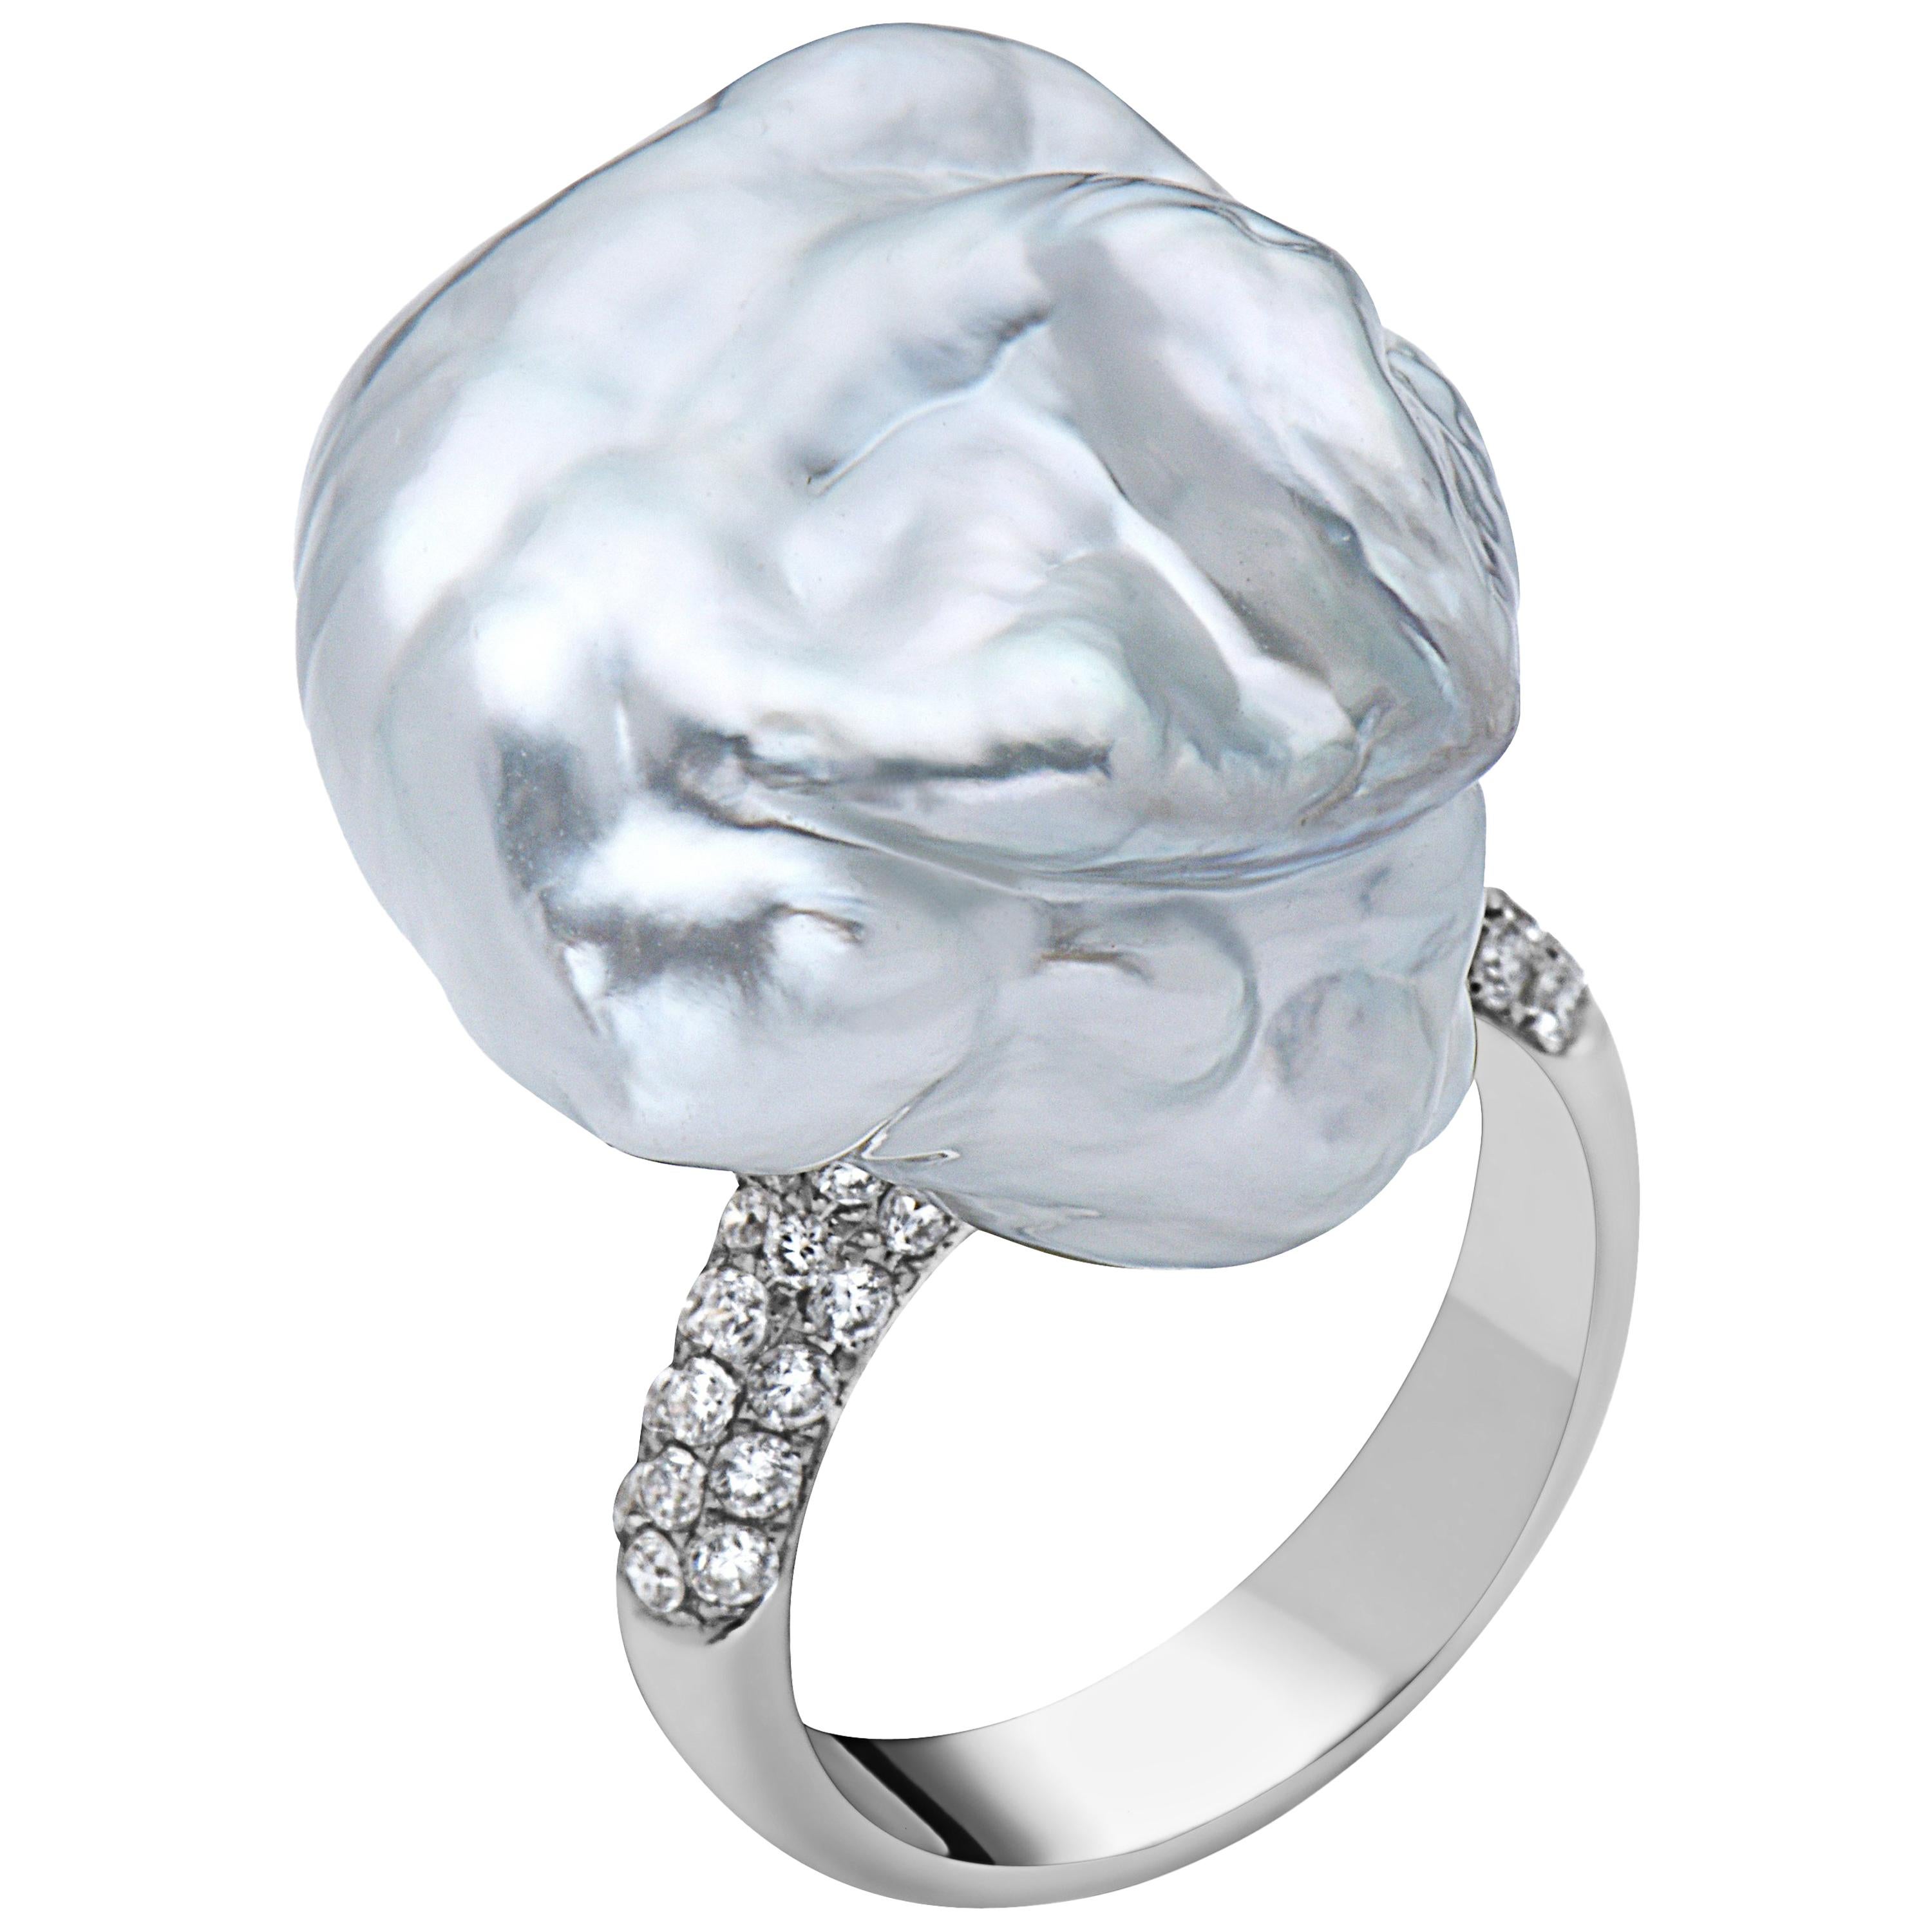 Astonishing White Natural South Sea Pearl Diamond Ring